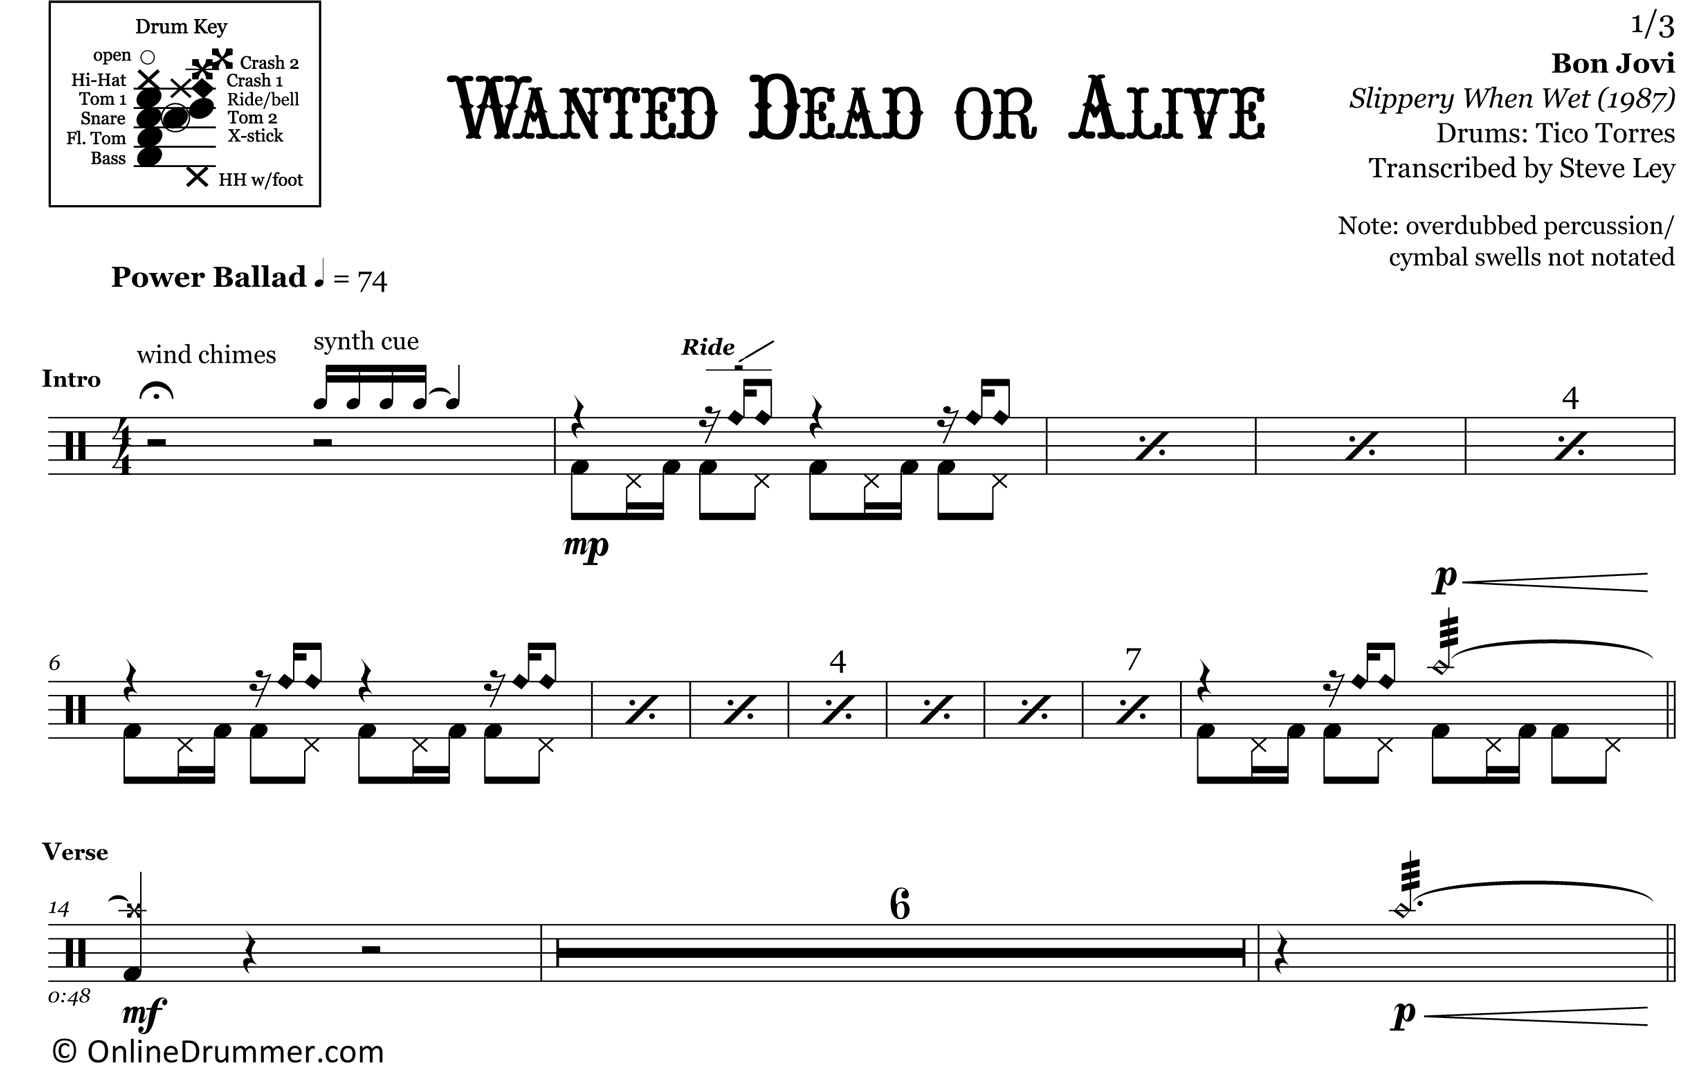 Wanted Dead or Alive - Bon Jovi - Drum Sheet Music